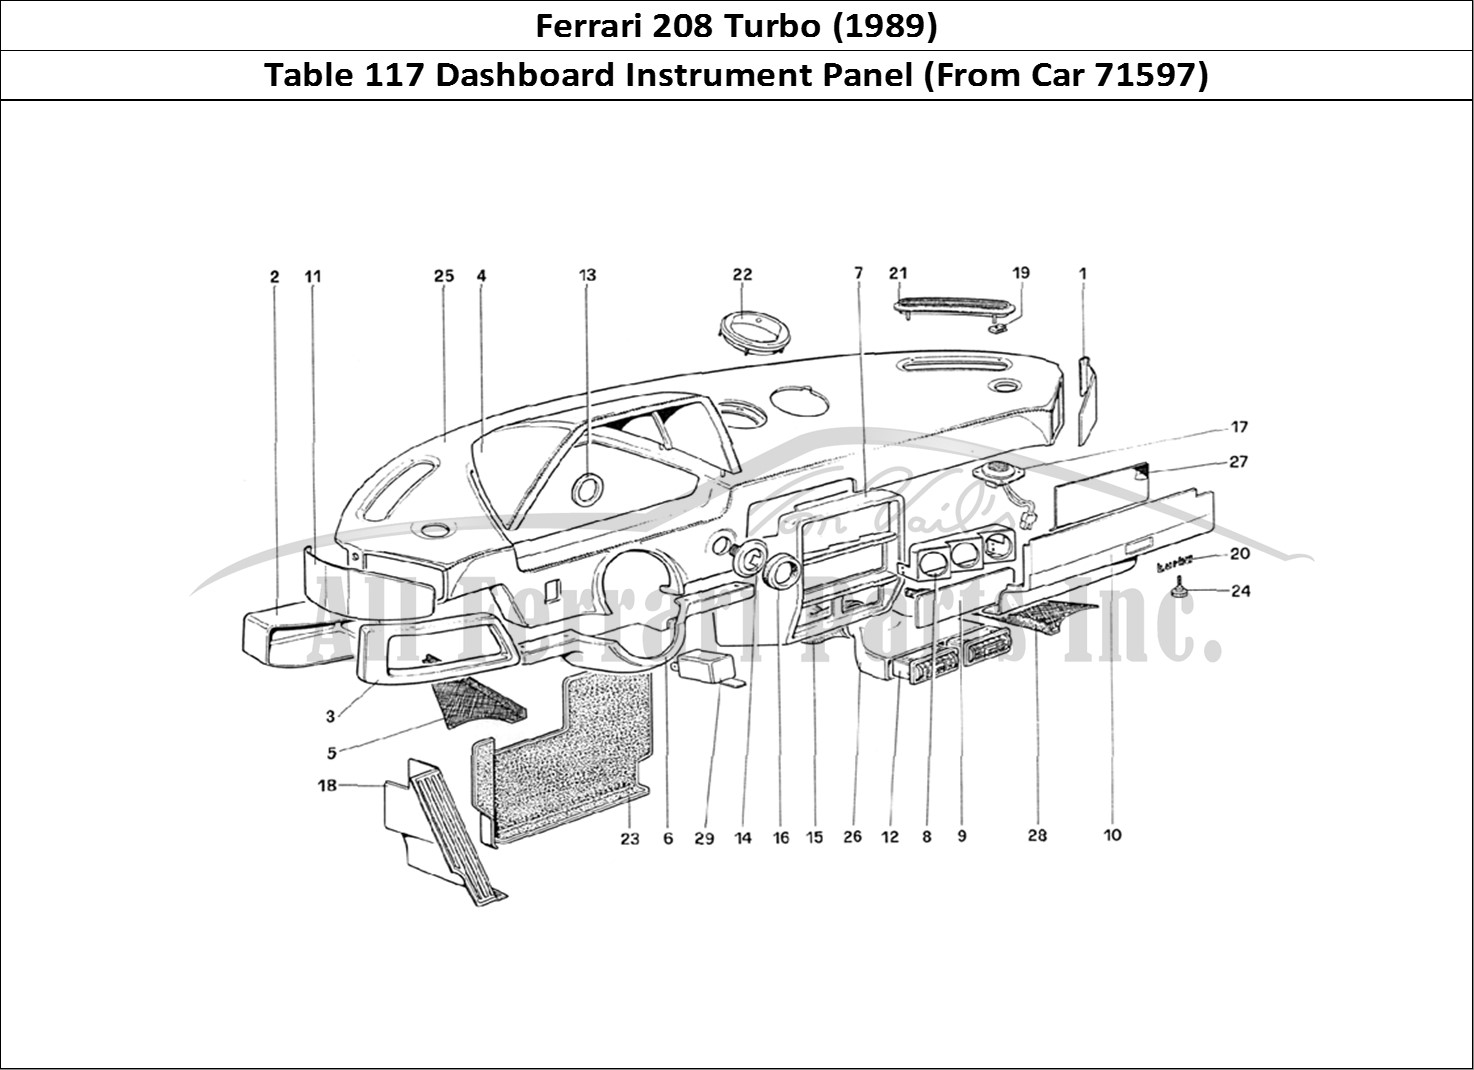 Ferrari Parts Ferrari 208 Turbo (1989) Page 117 Instruments Panel (From C